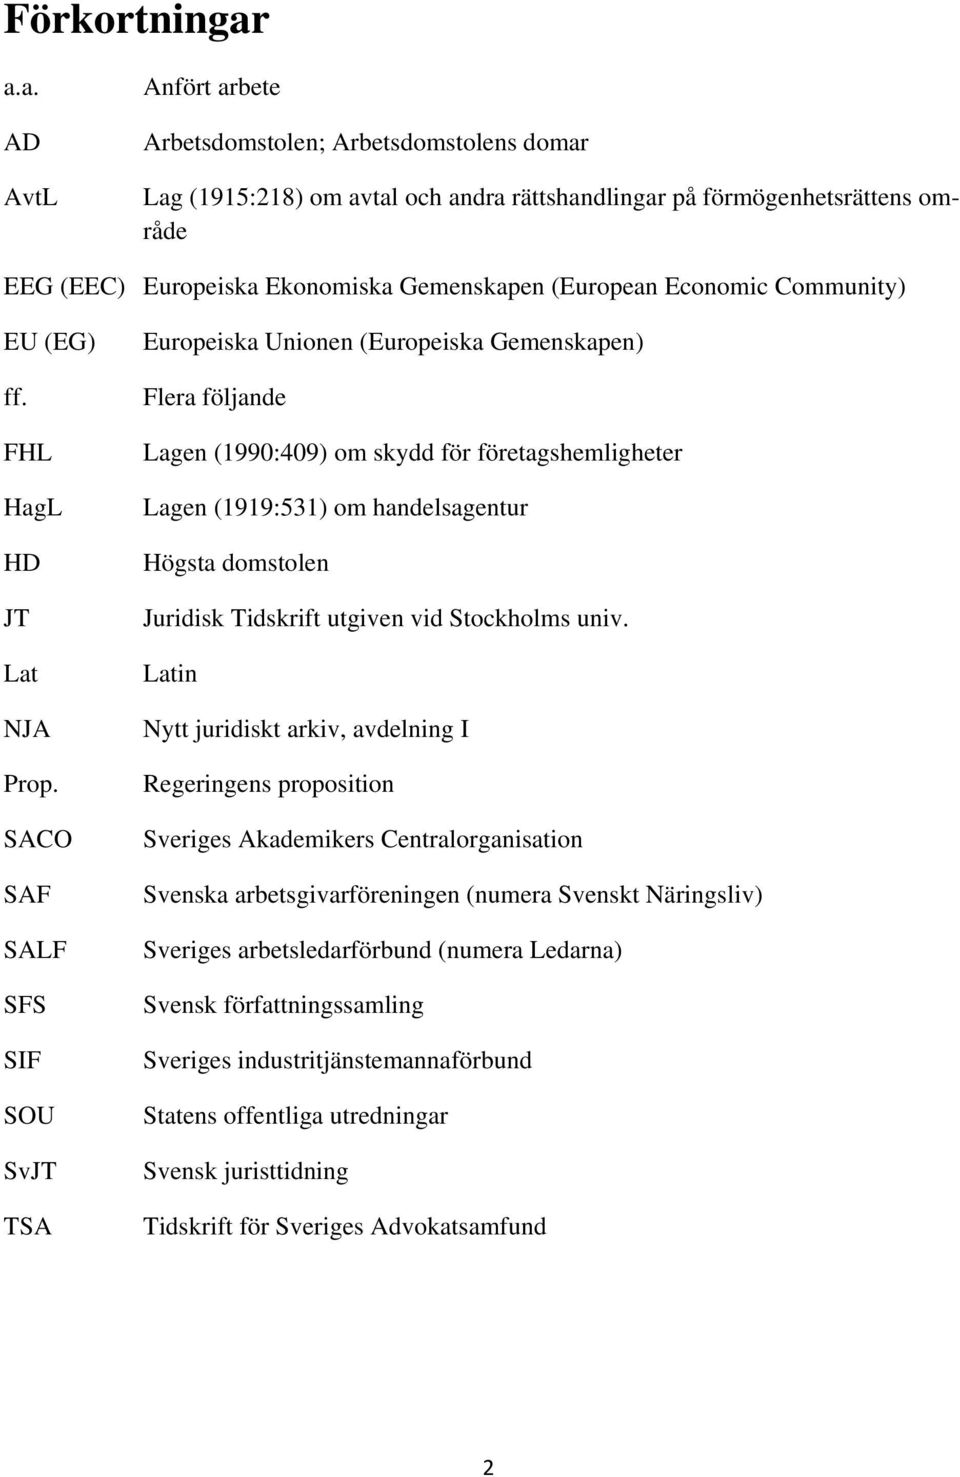 (European Economic Community) EU (EG) ff. FHL HagL HD JT Lat NJA Prop.